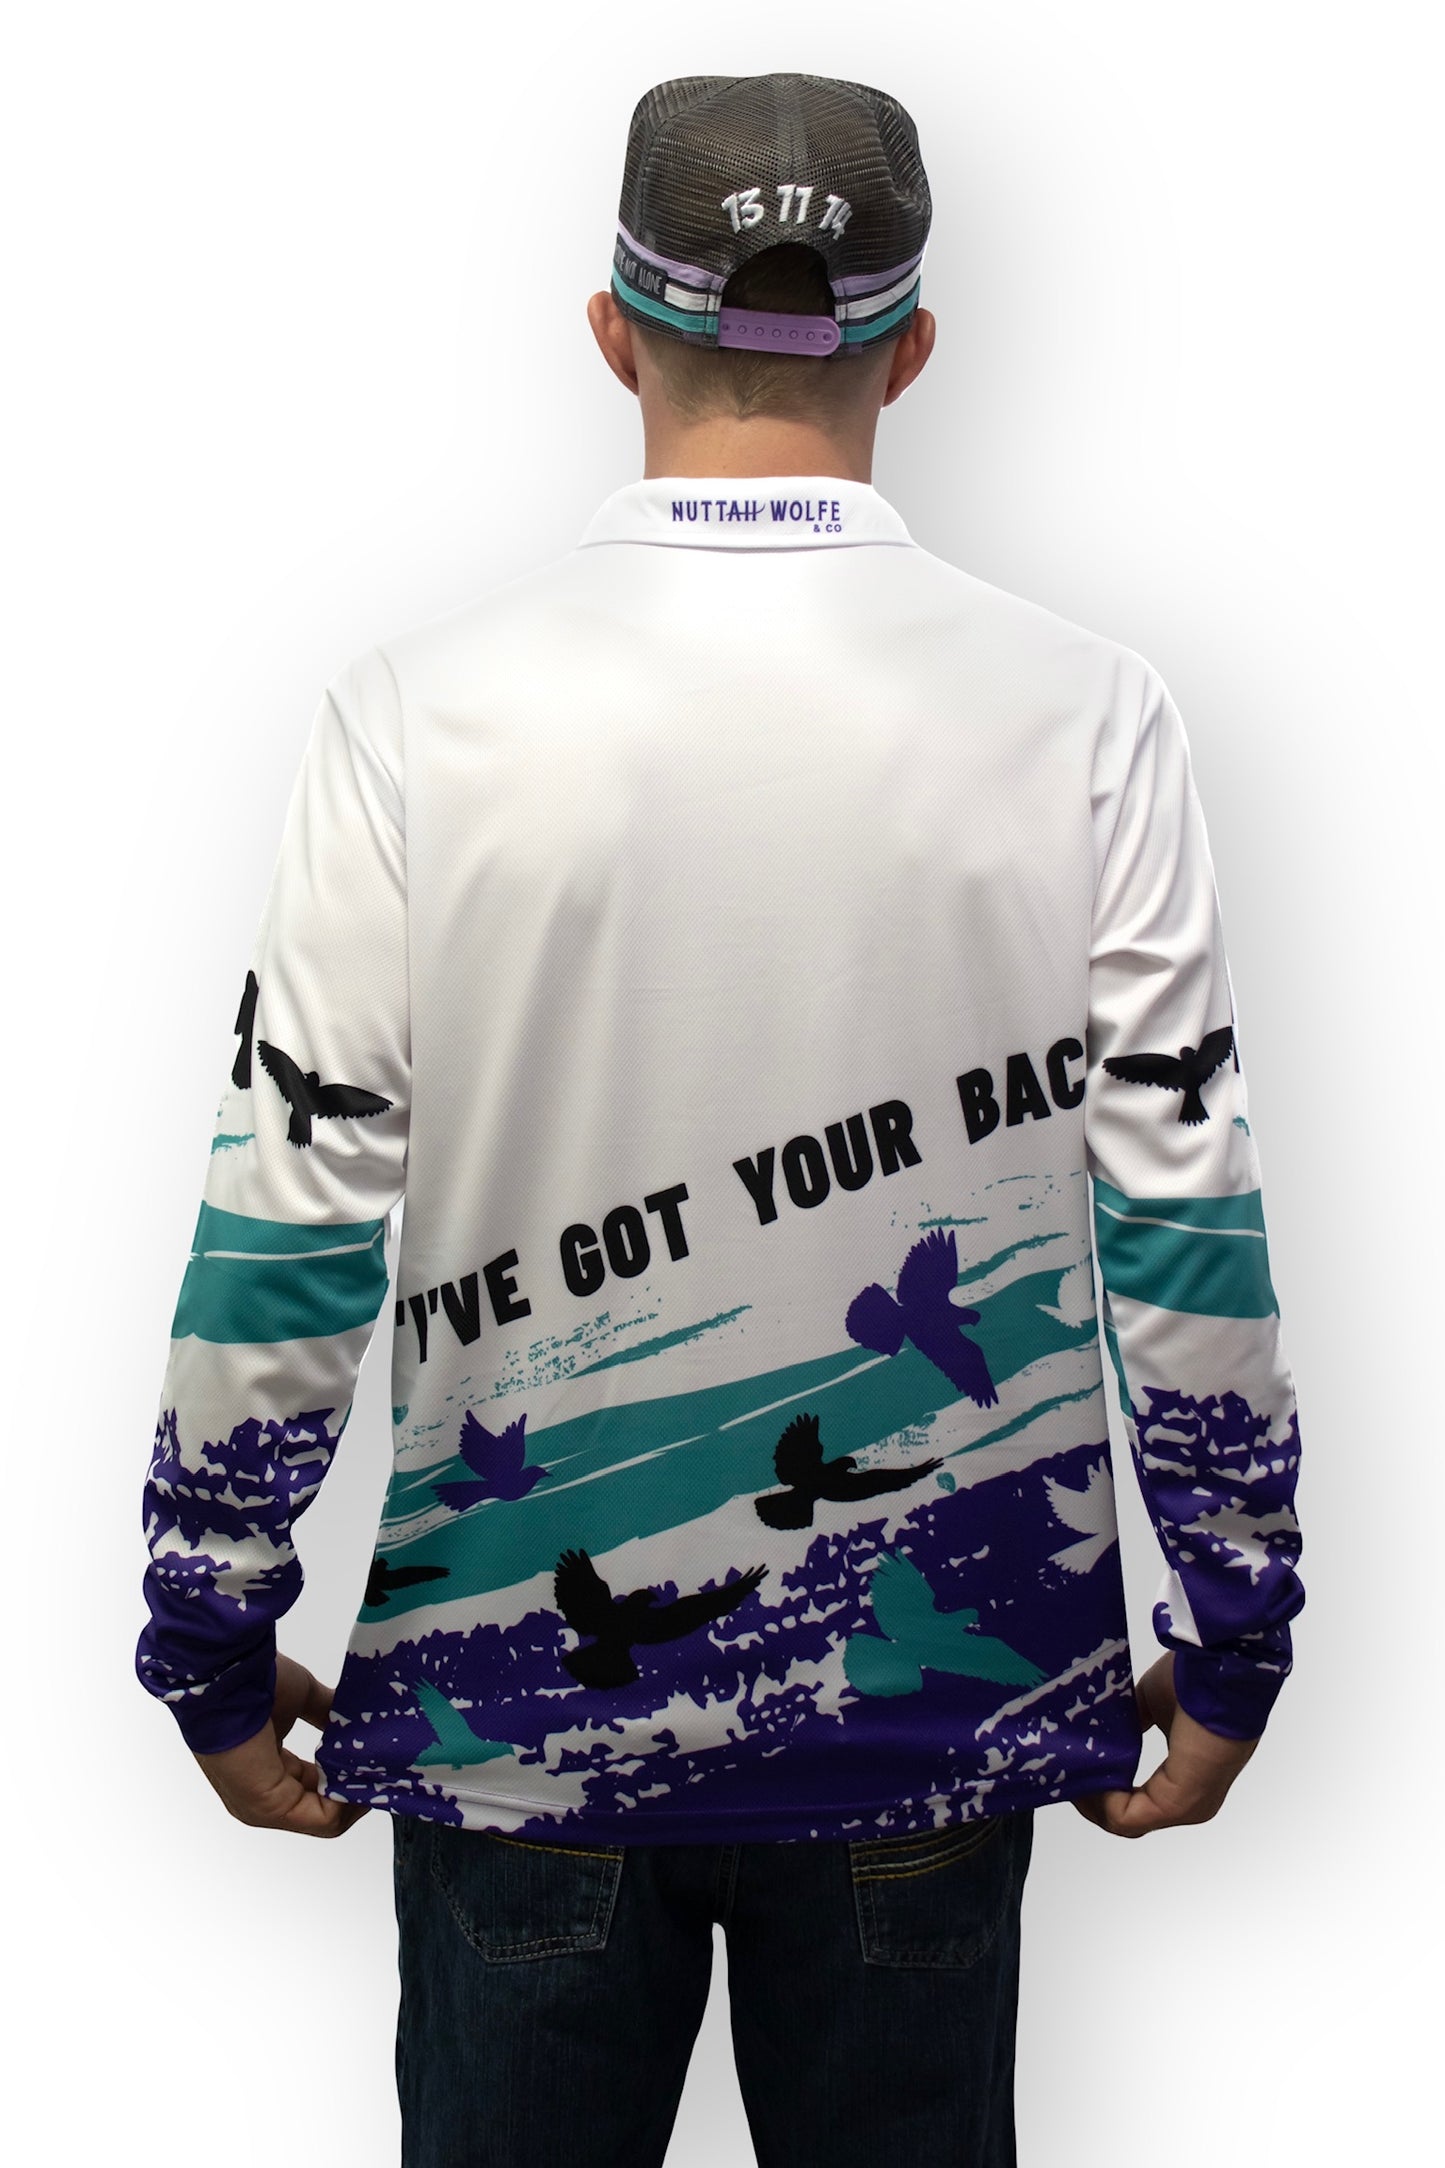 I've Got Your Back Fishing Shirt